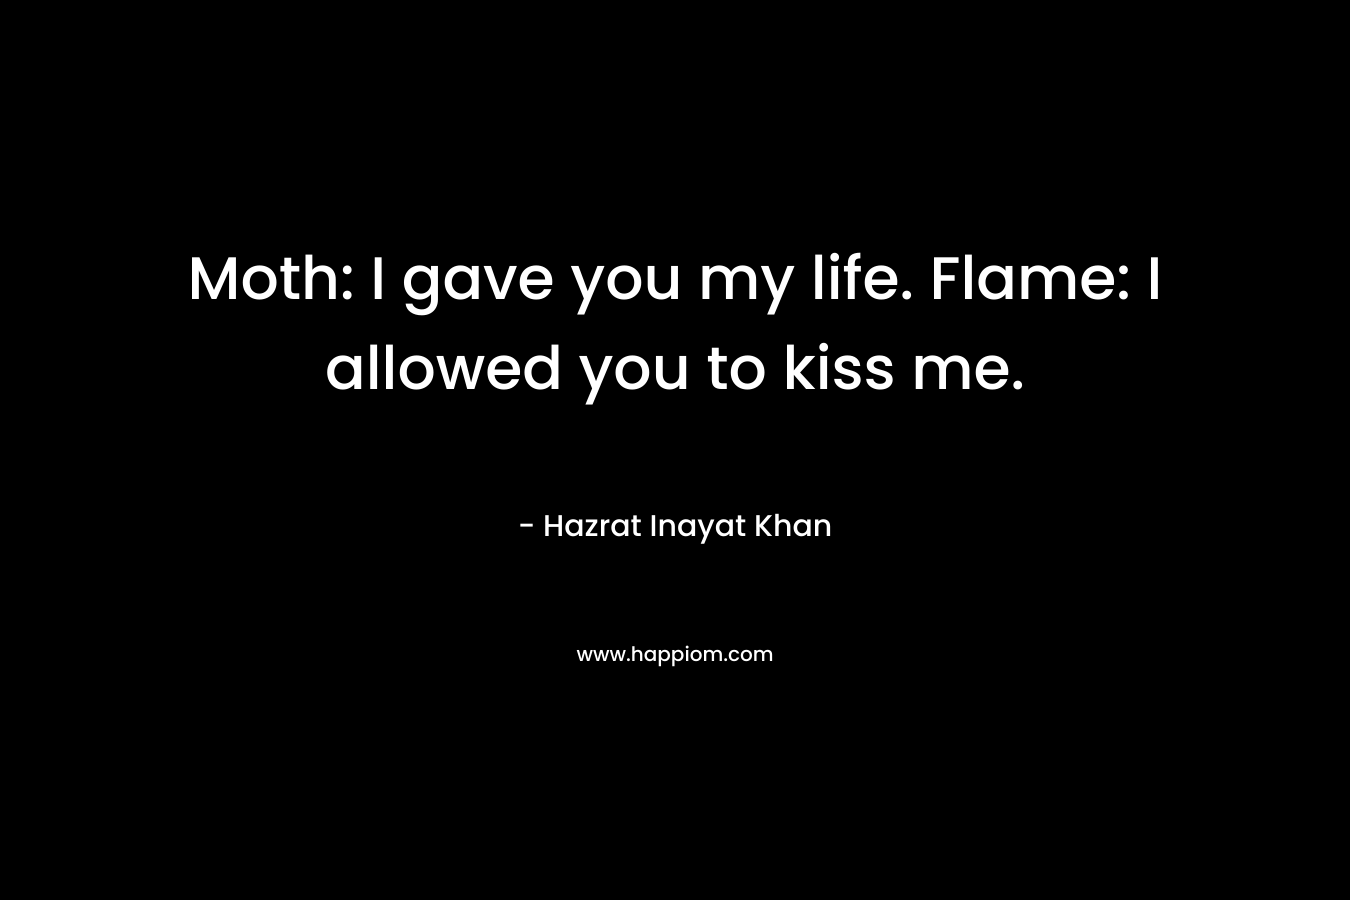 Moth: I gave you my life. Flame: I allowed you to kiss me.